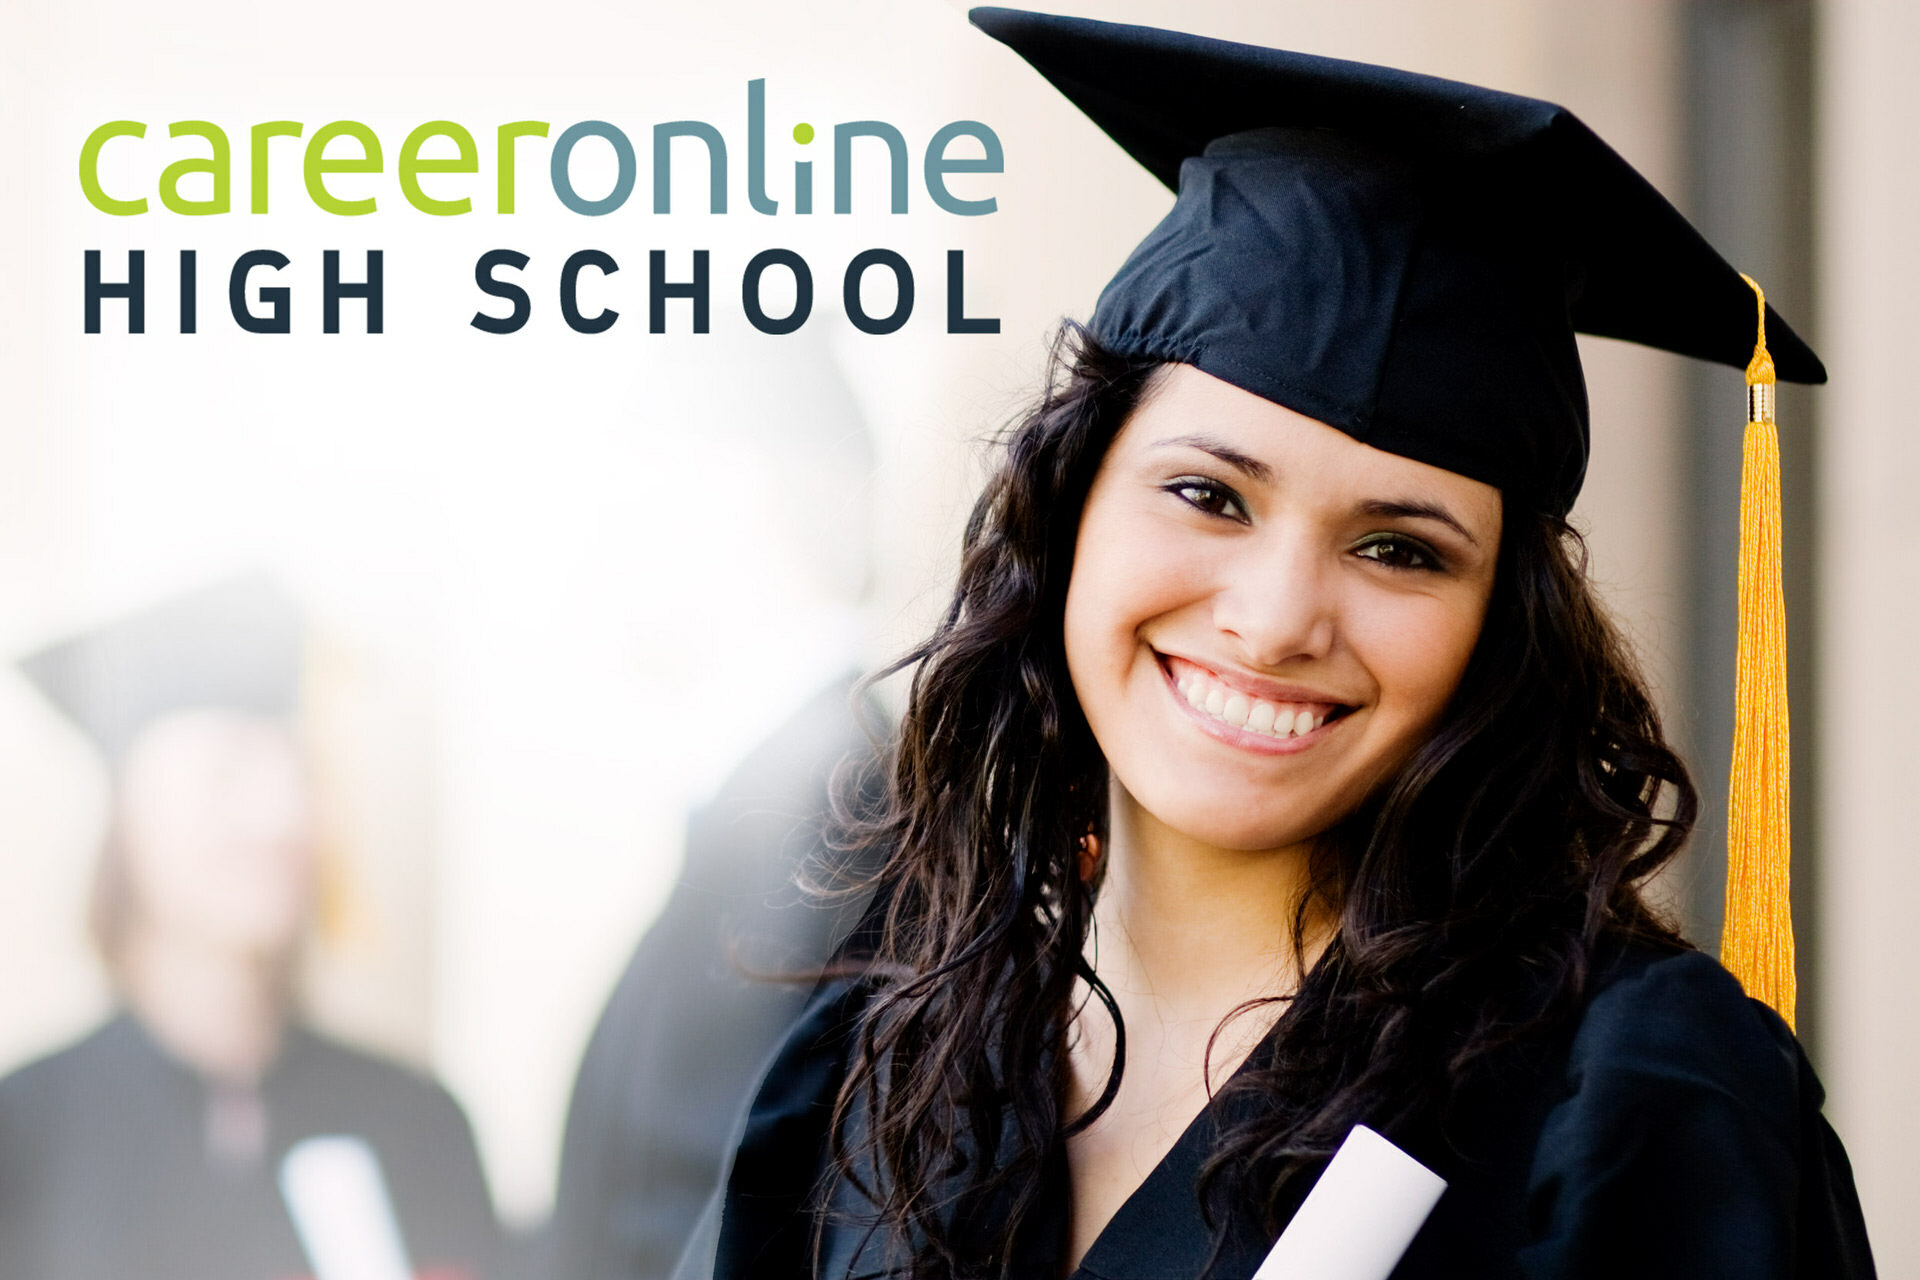 Earn Your High School Diploma  - Career Online High School graduate and logo